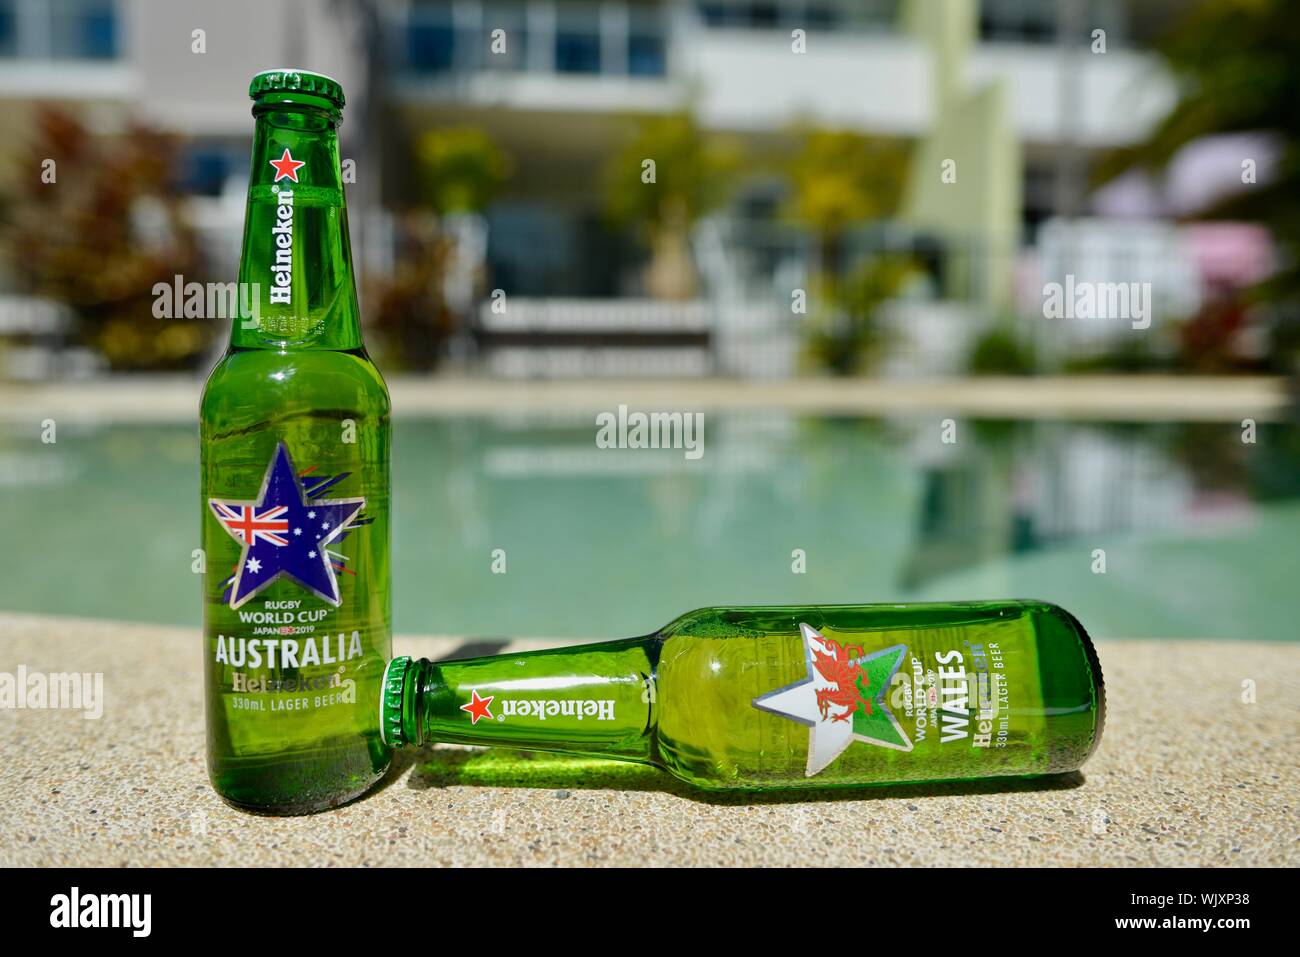 Australia versus Wales, Australia Wins, Heineken 2019 Japan Rugby world cup beer bottles Stock Photo